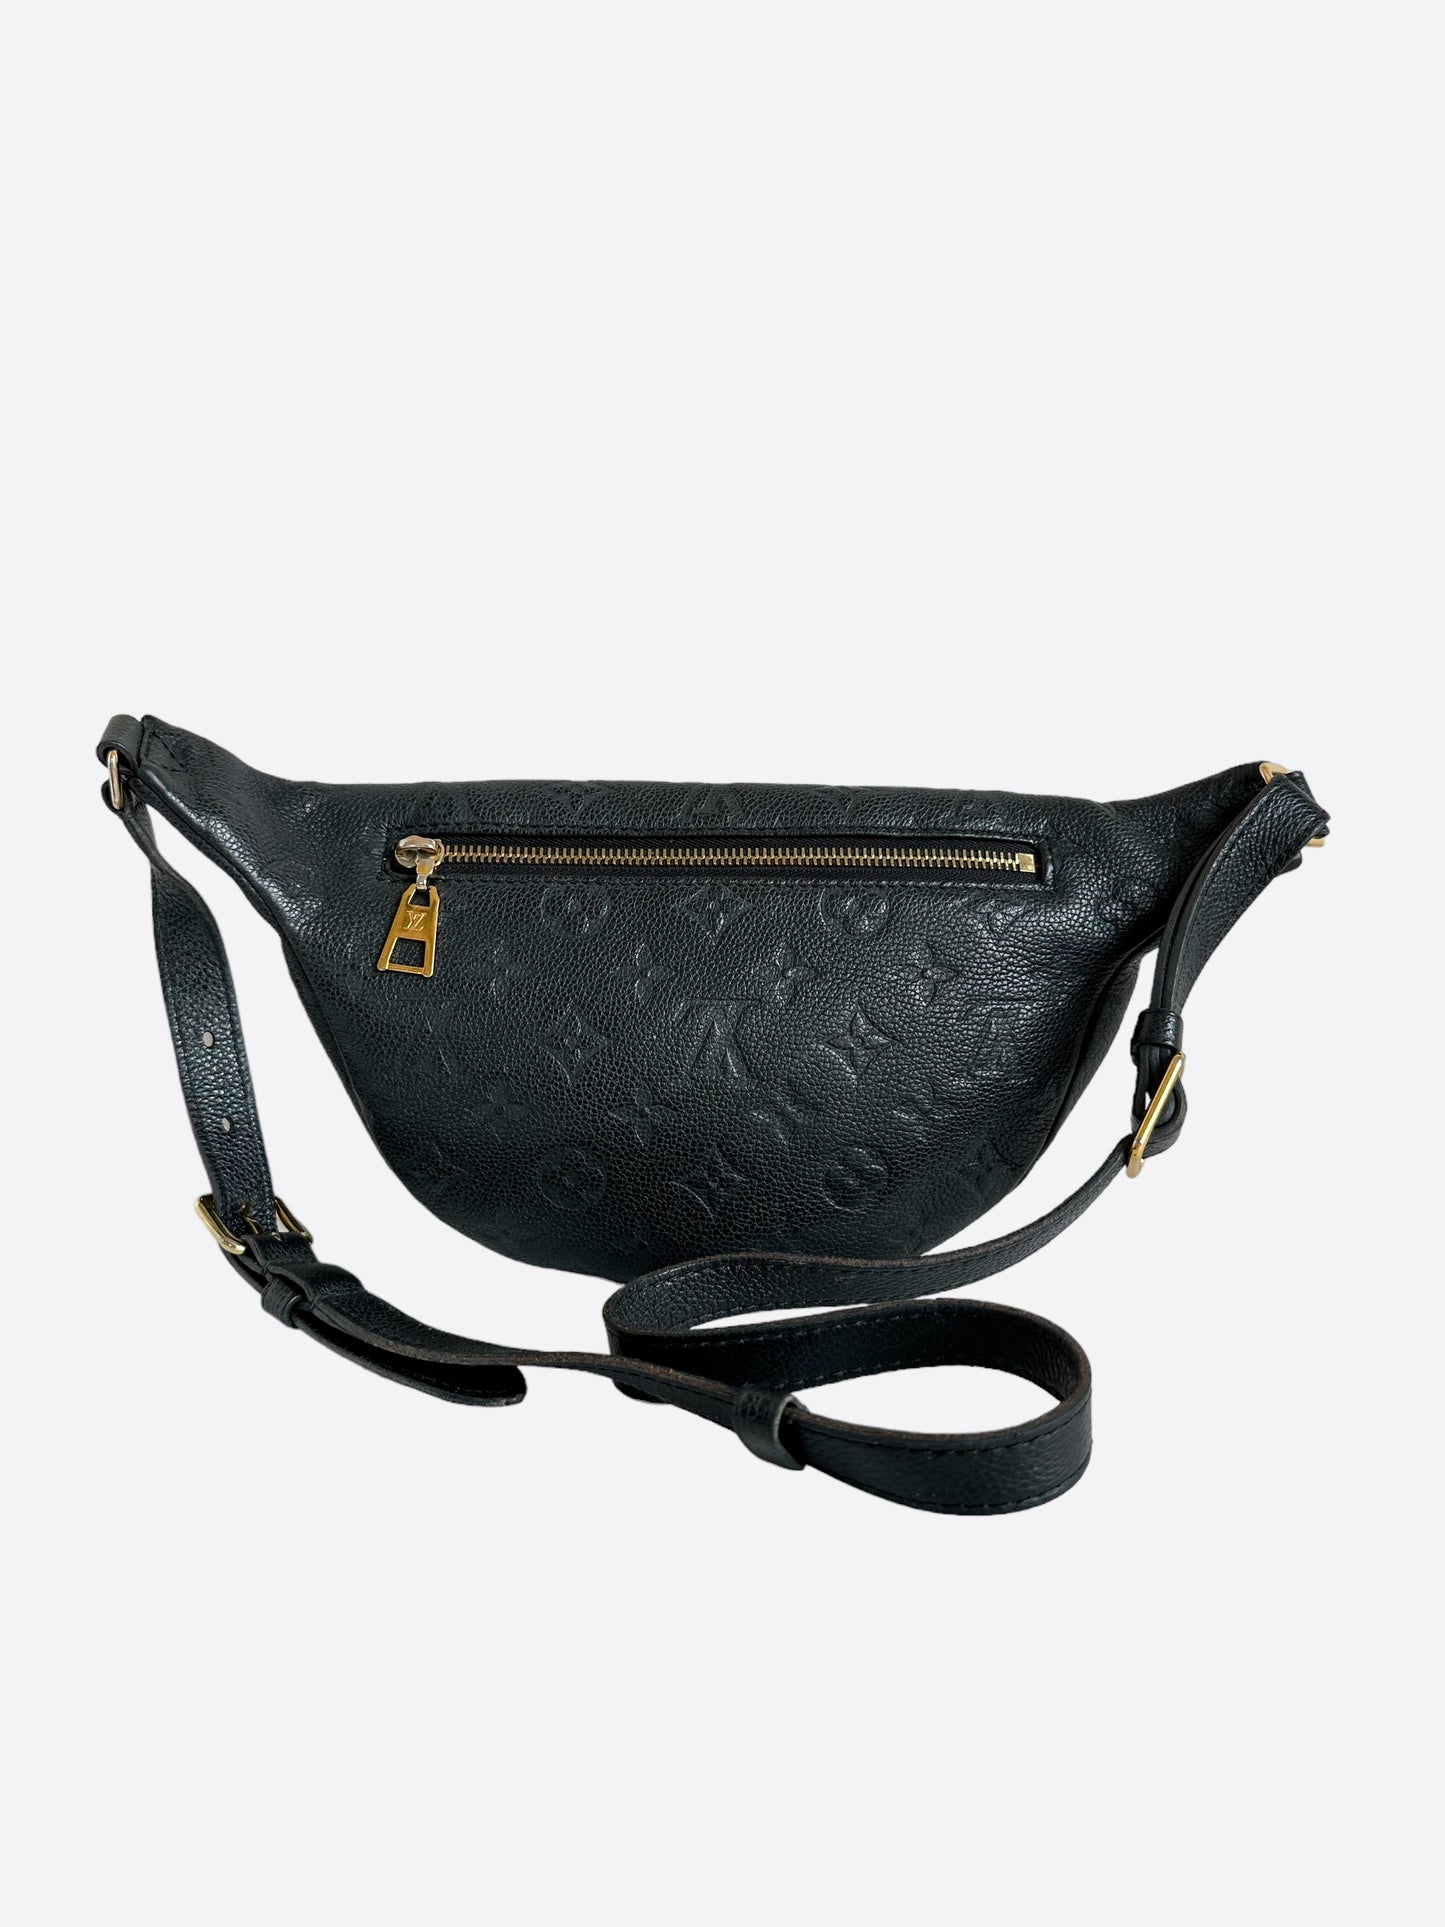 Louis Vuitton Bumbag, Black Empreinte Leather, Gold Hardware